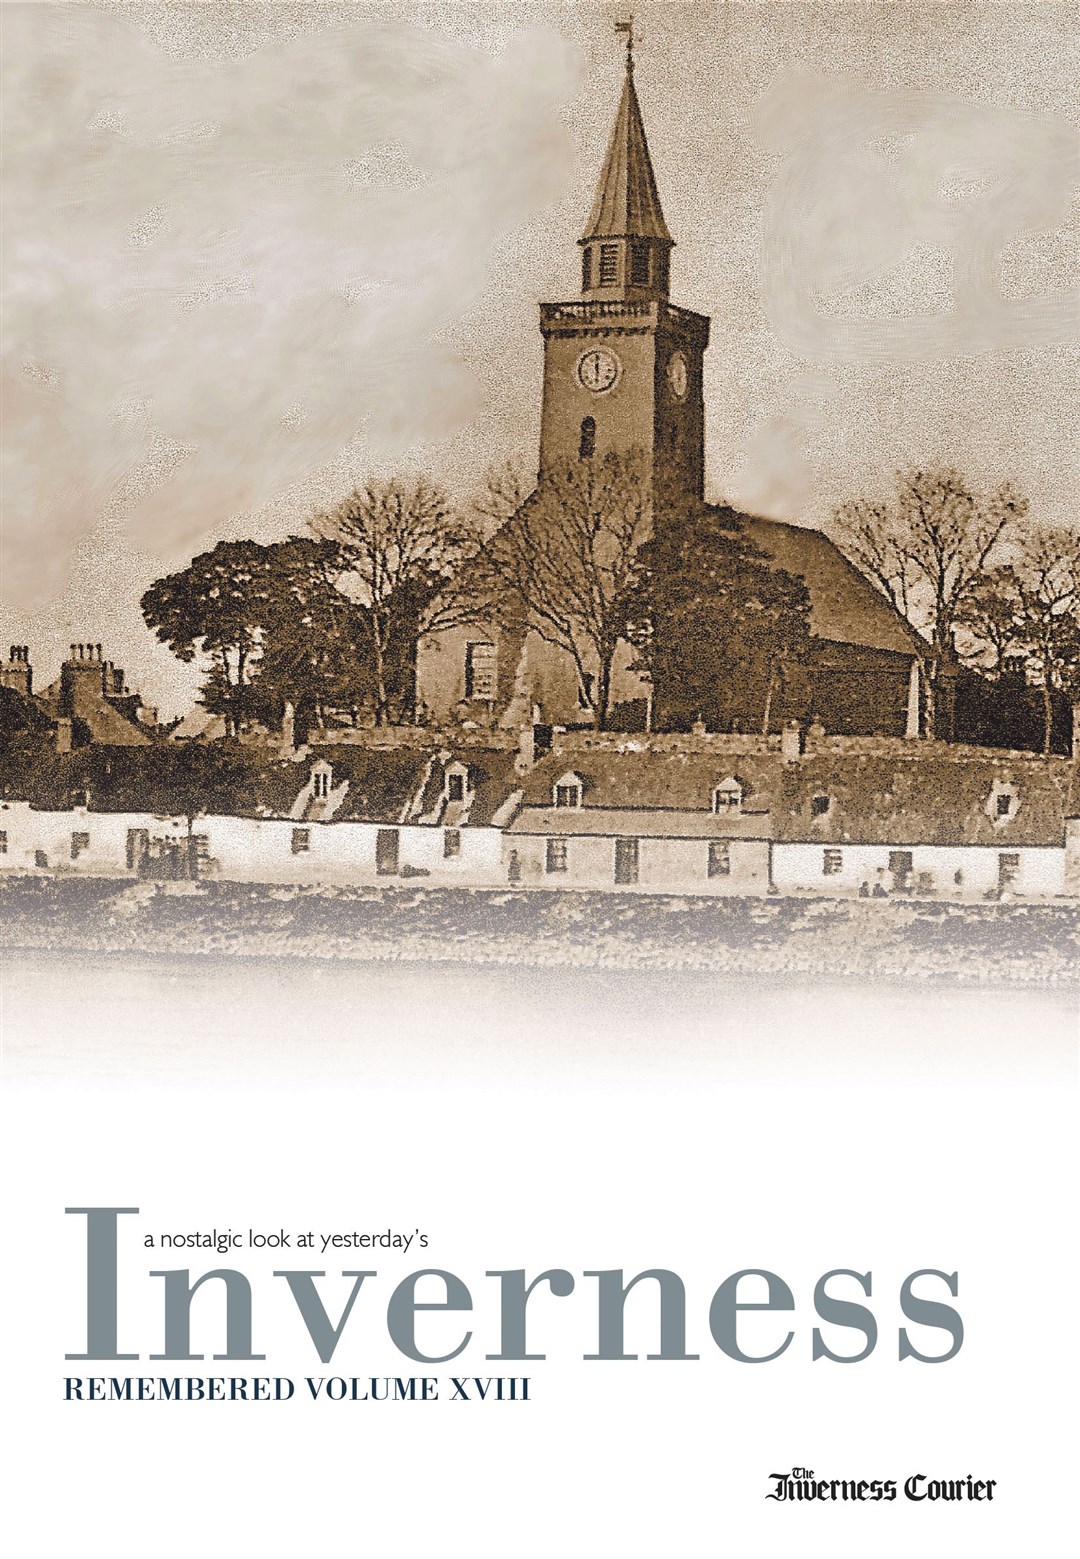 Inverness Remembered Volume XVIII.